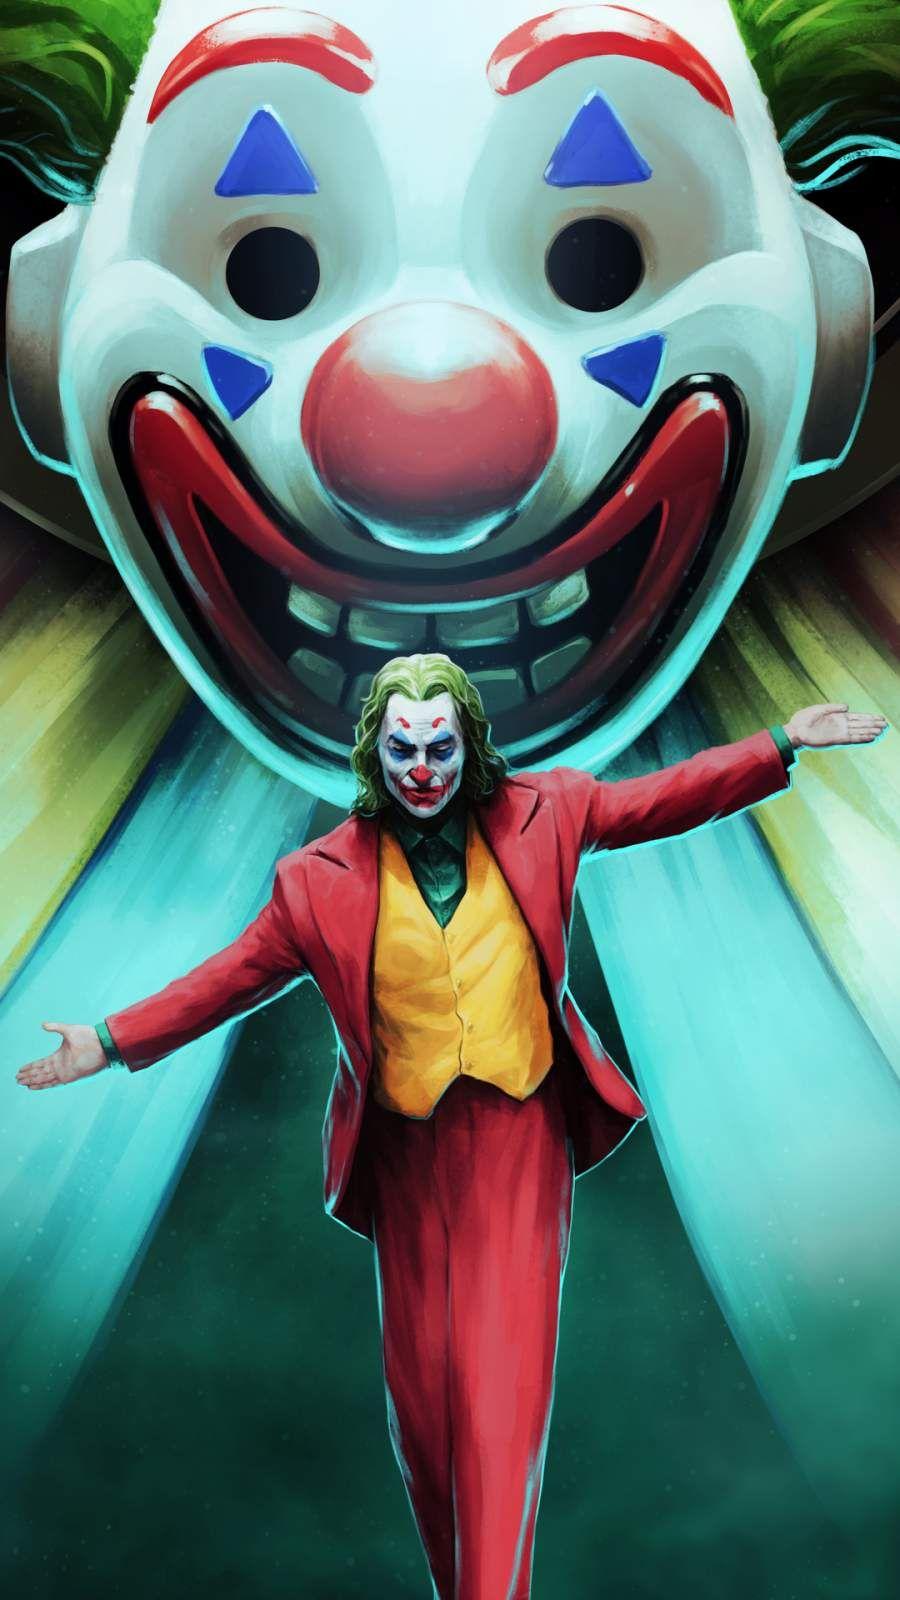 Joker Movie Art iPhone Wallpaper. Joker wallpaper, Joker comic